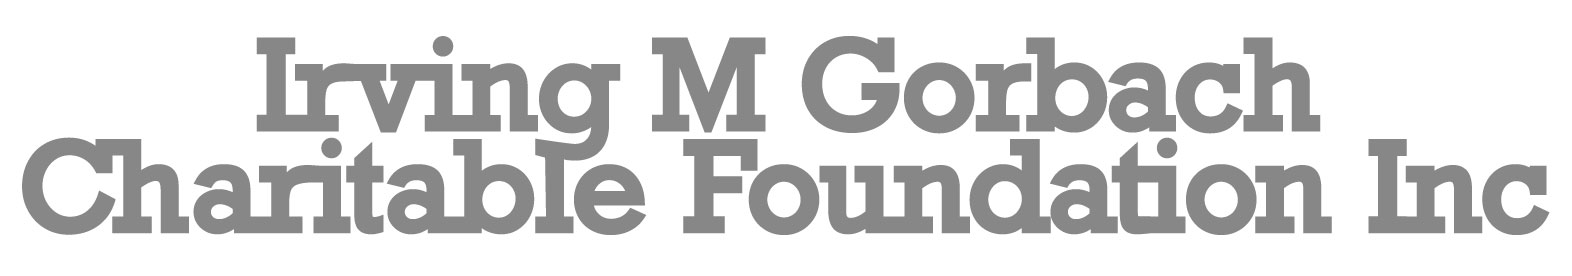 Irving M Gorbach Charitable Foundation